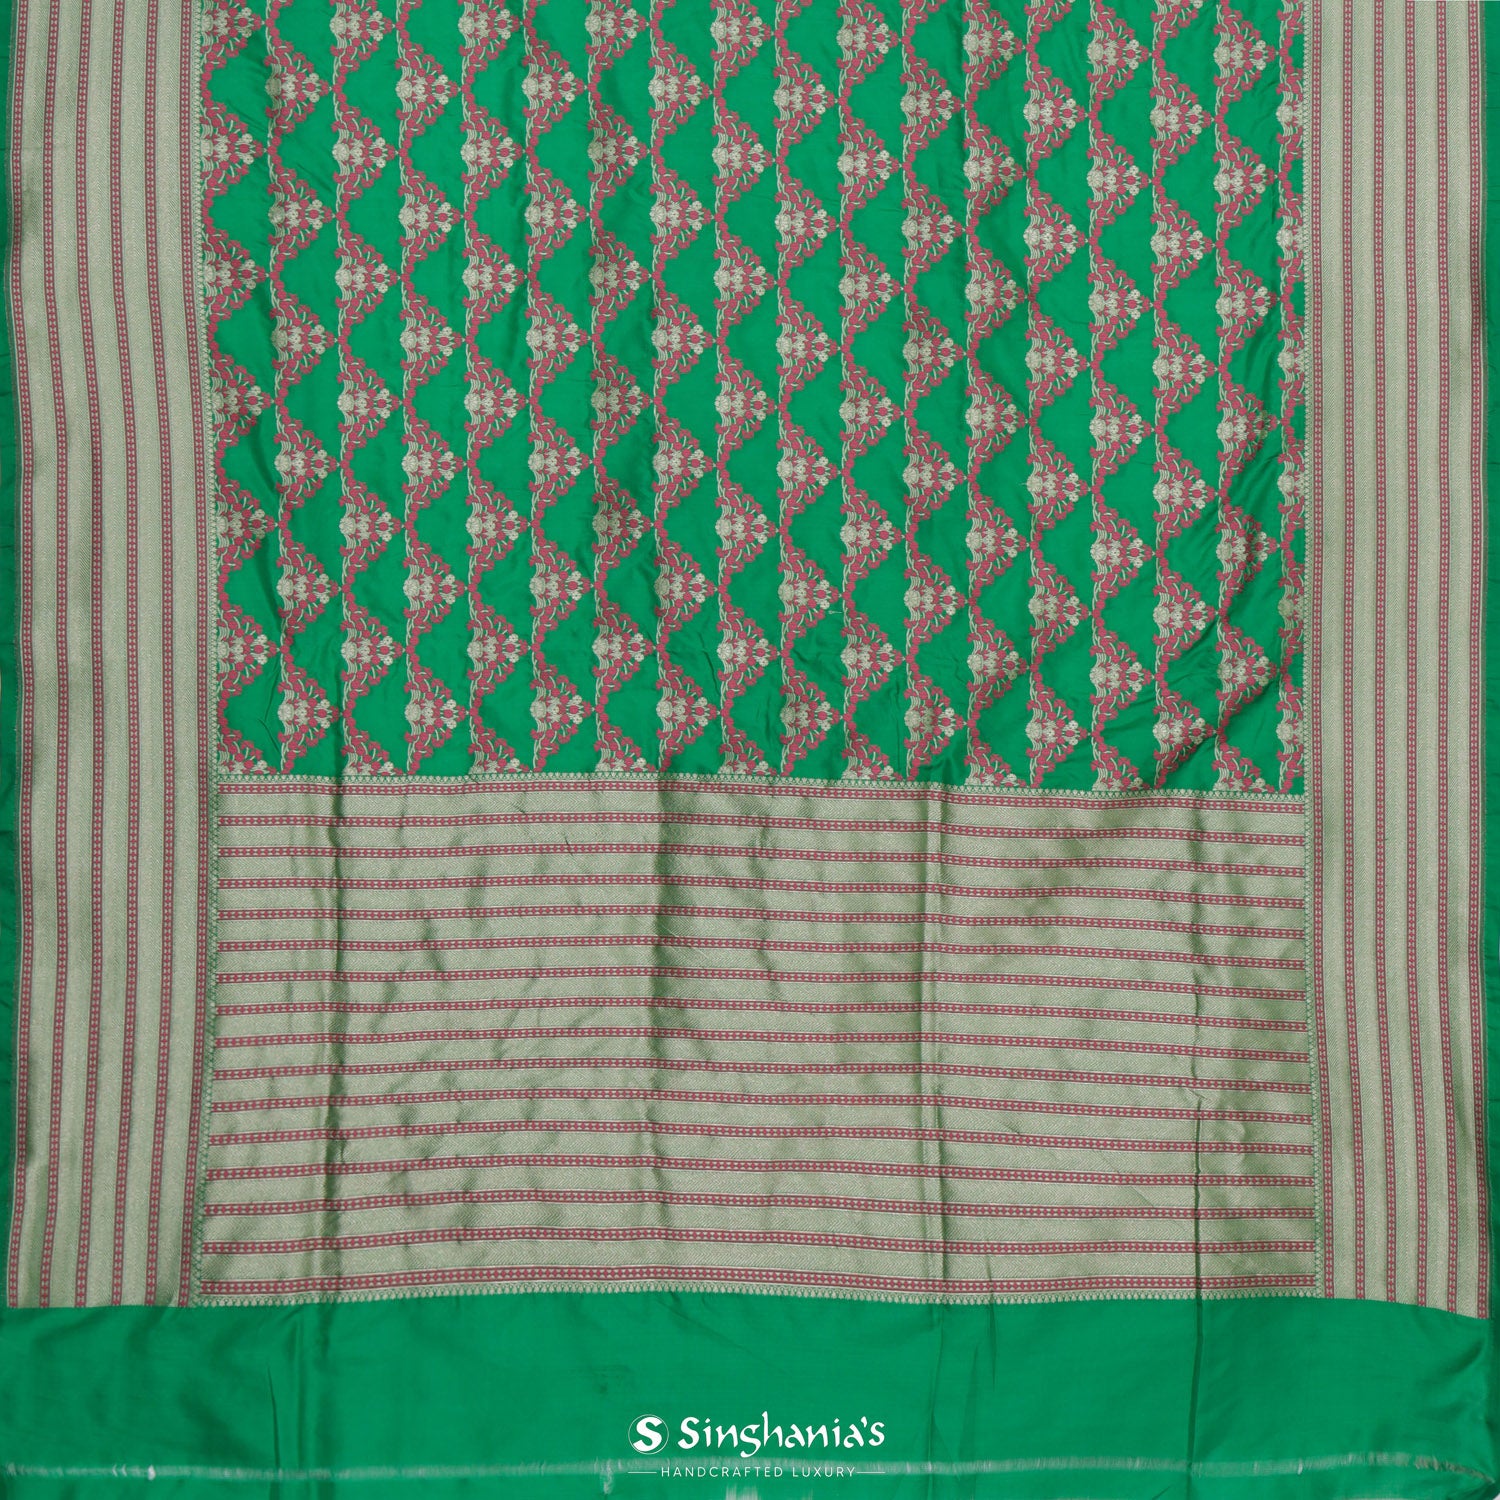 Christmas Green Banarasi Saree With Floral Jaal Pattern